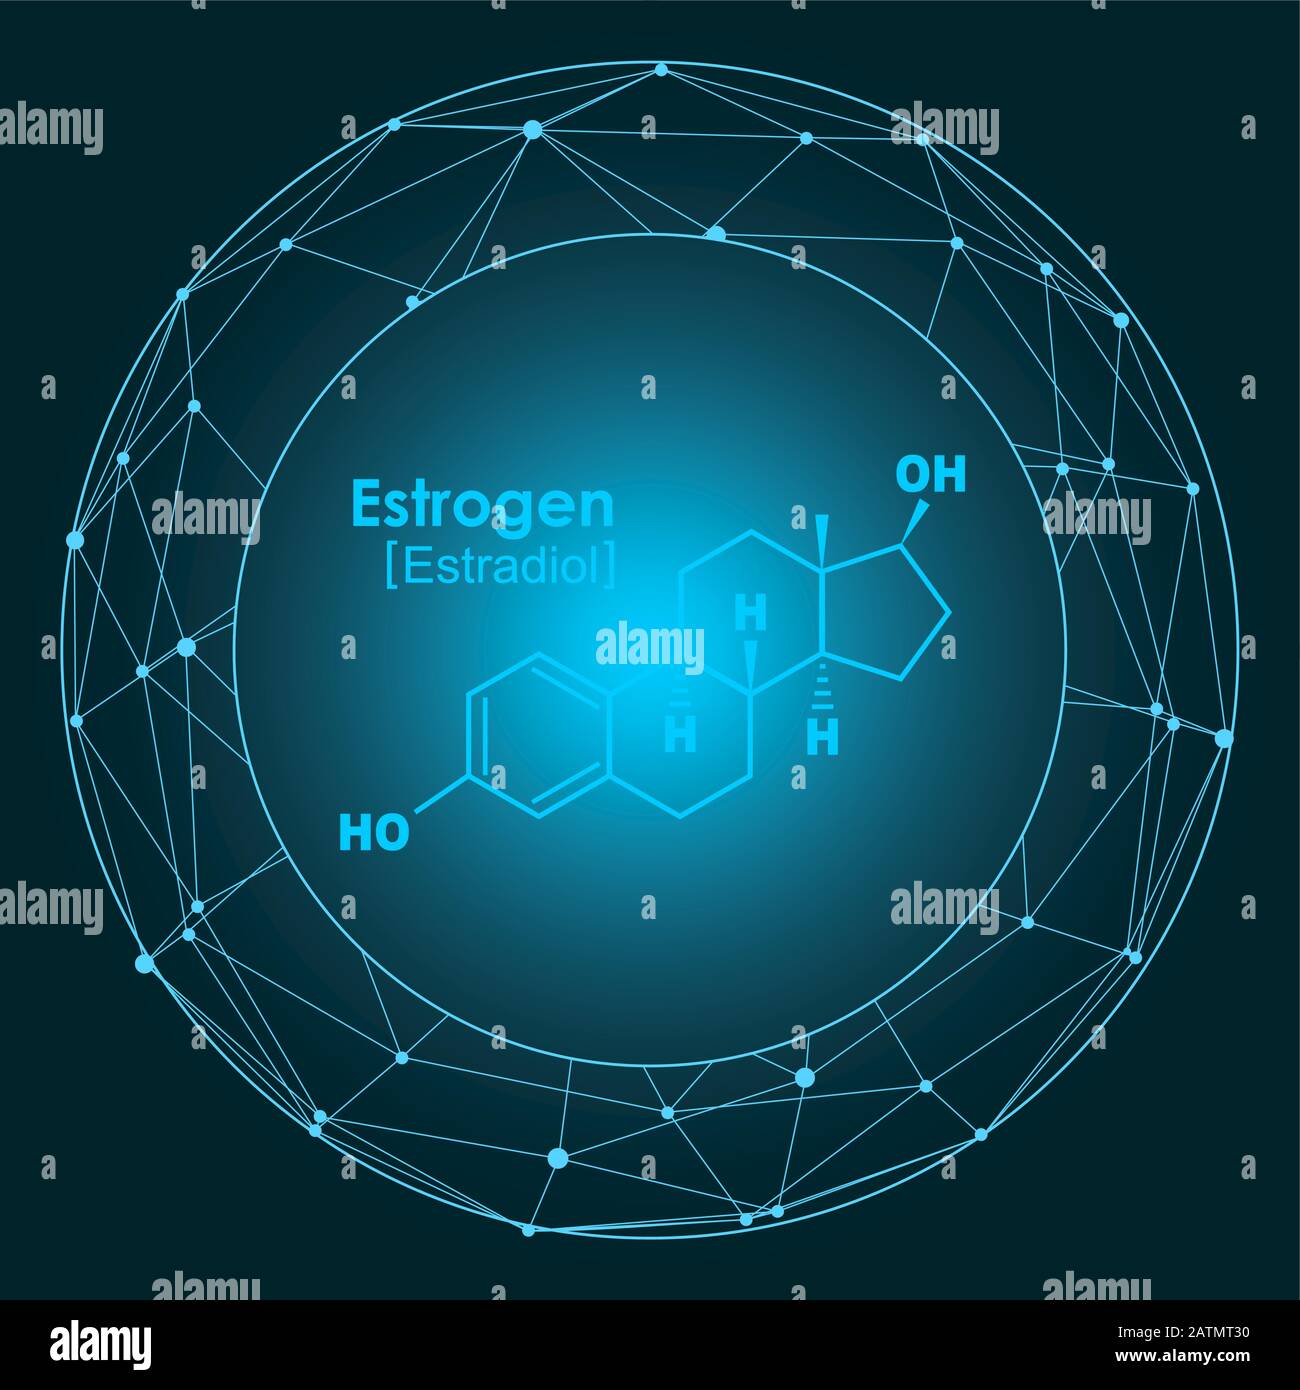 Chemisches Molekularformelhormon Östrogen. Infografiken. Verbundene Linien mit Punktrahmen Stock Vektor